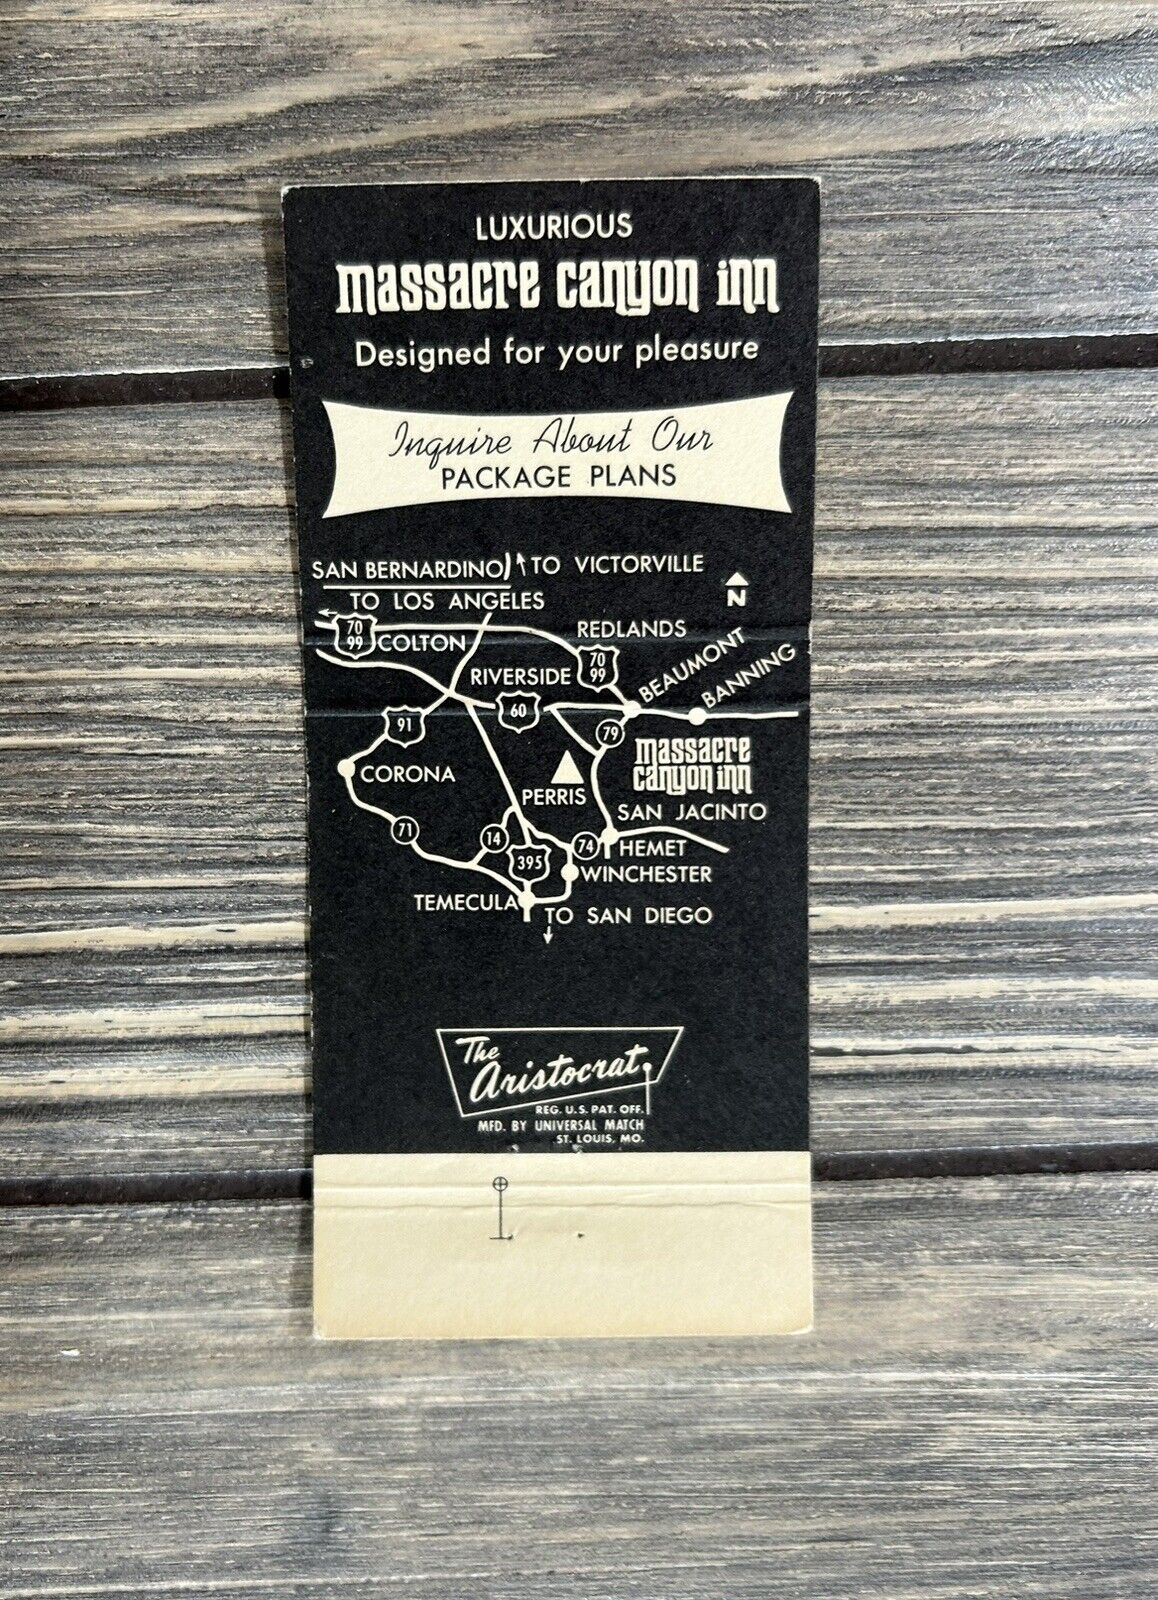 Vintage Luxurious Massacre Canyon Inn The Aristocrat Matchbook Cover